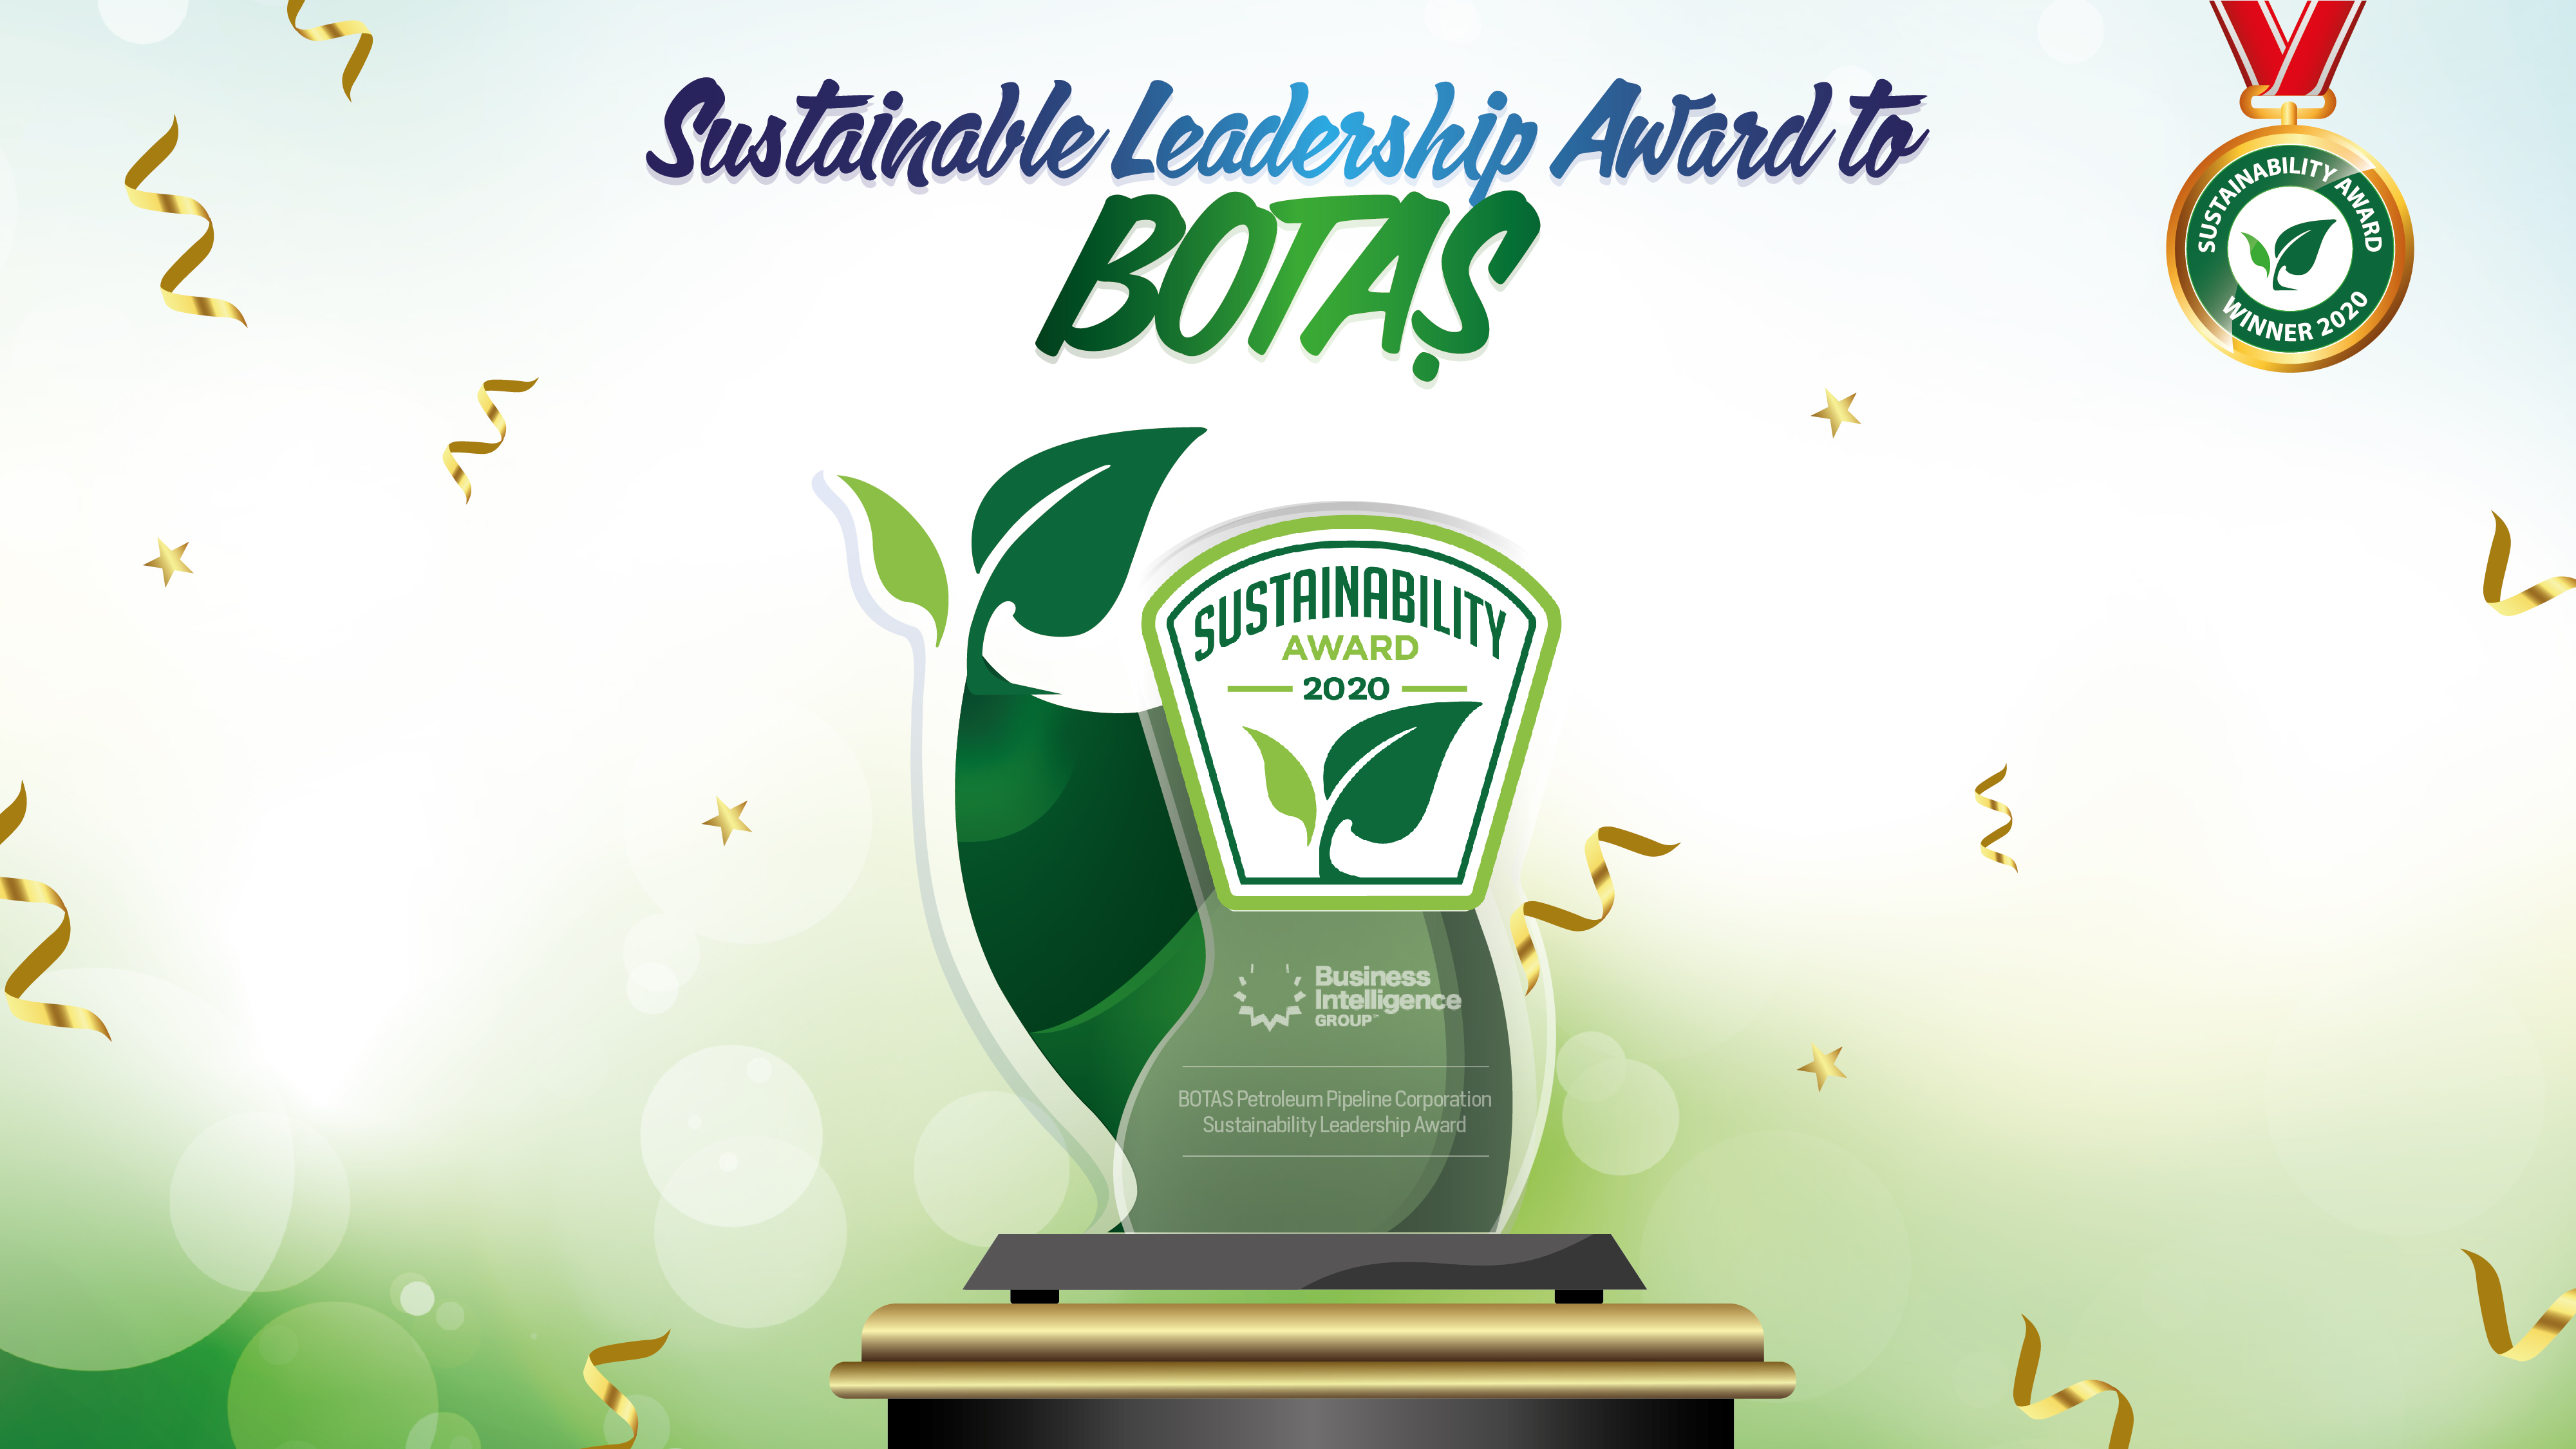 Sustainable Leadership Award to BOTAŞ